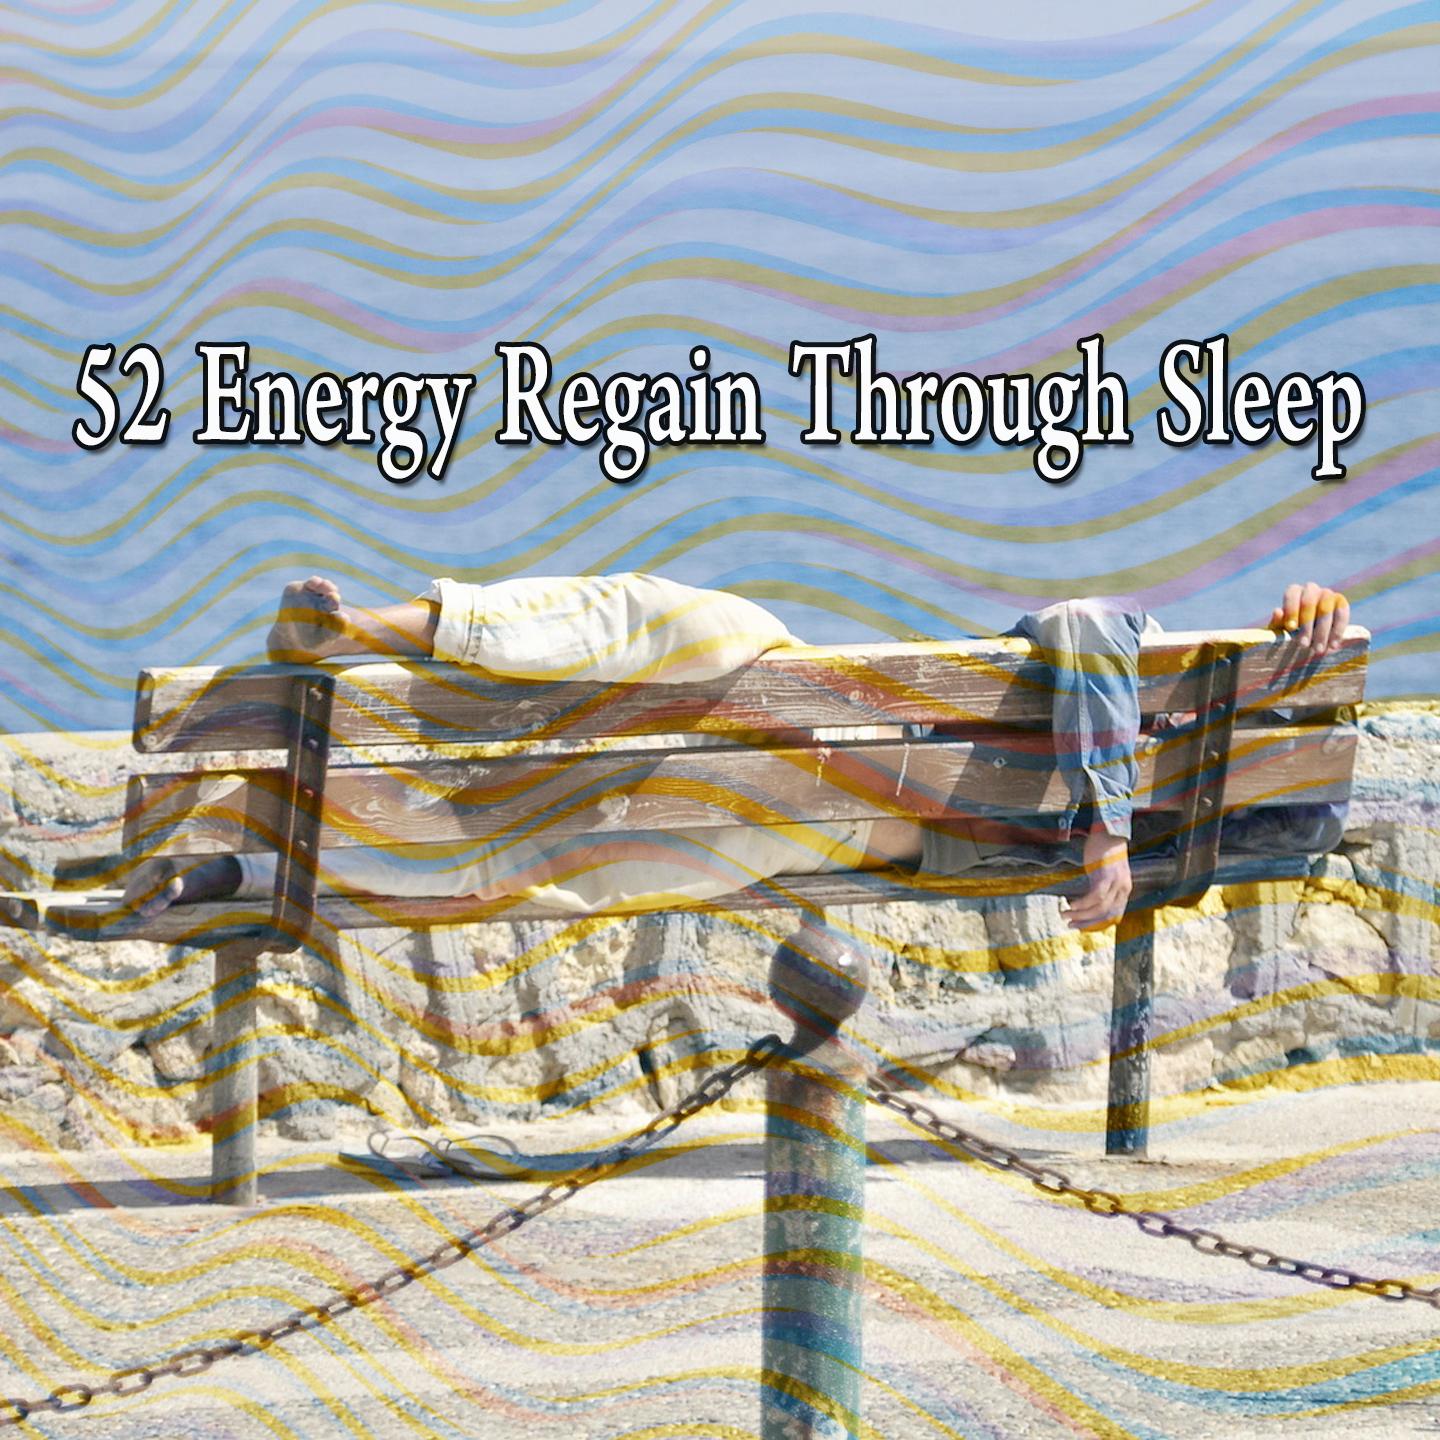 52 Energy Regain Through Sleep